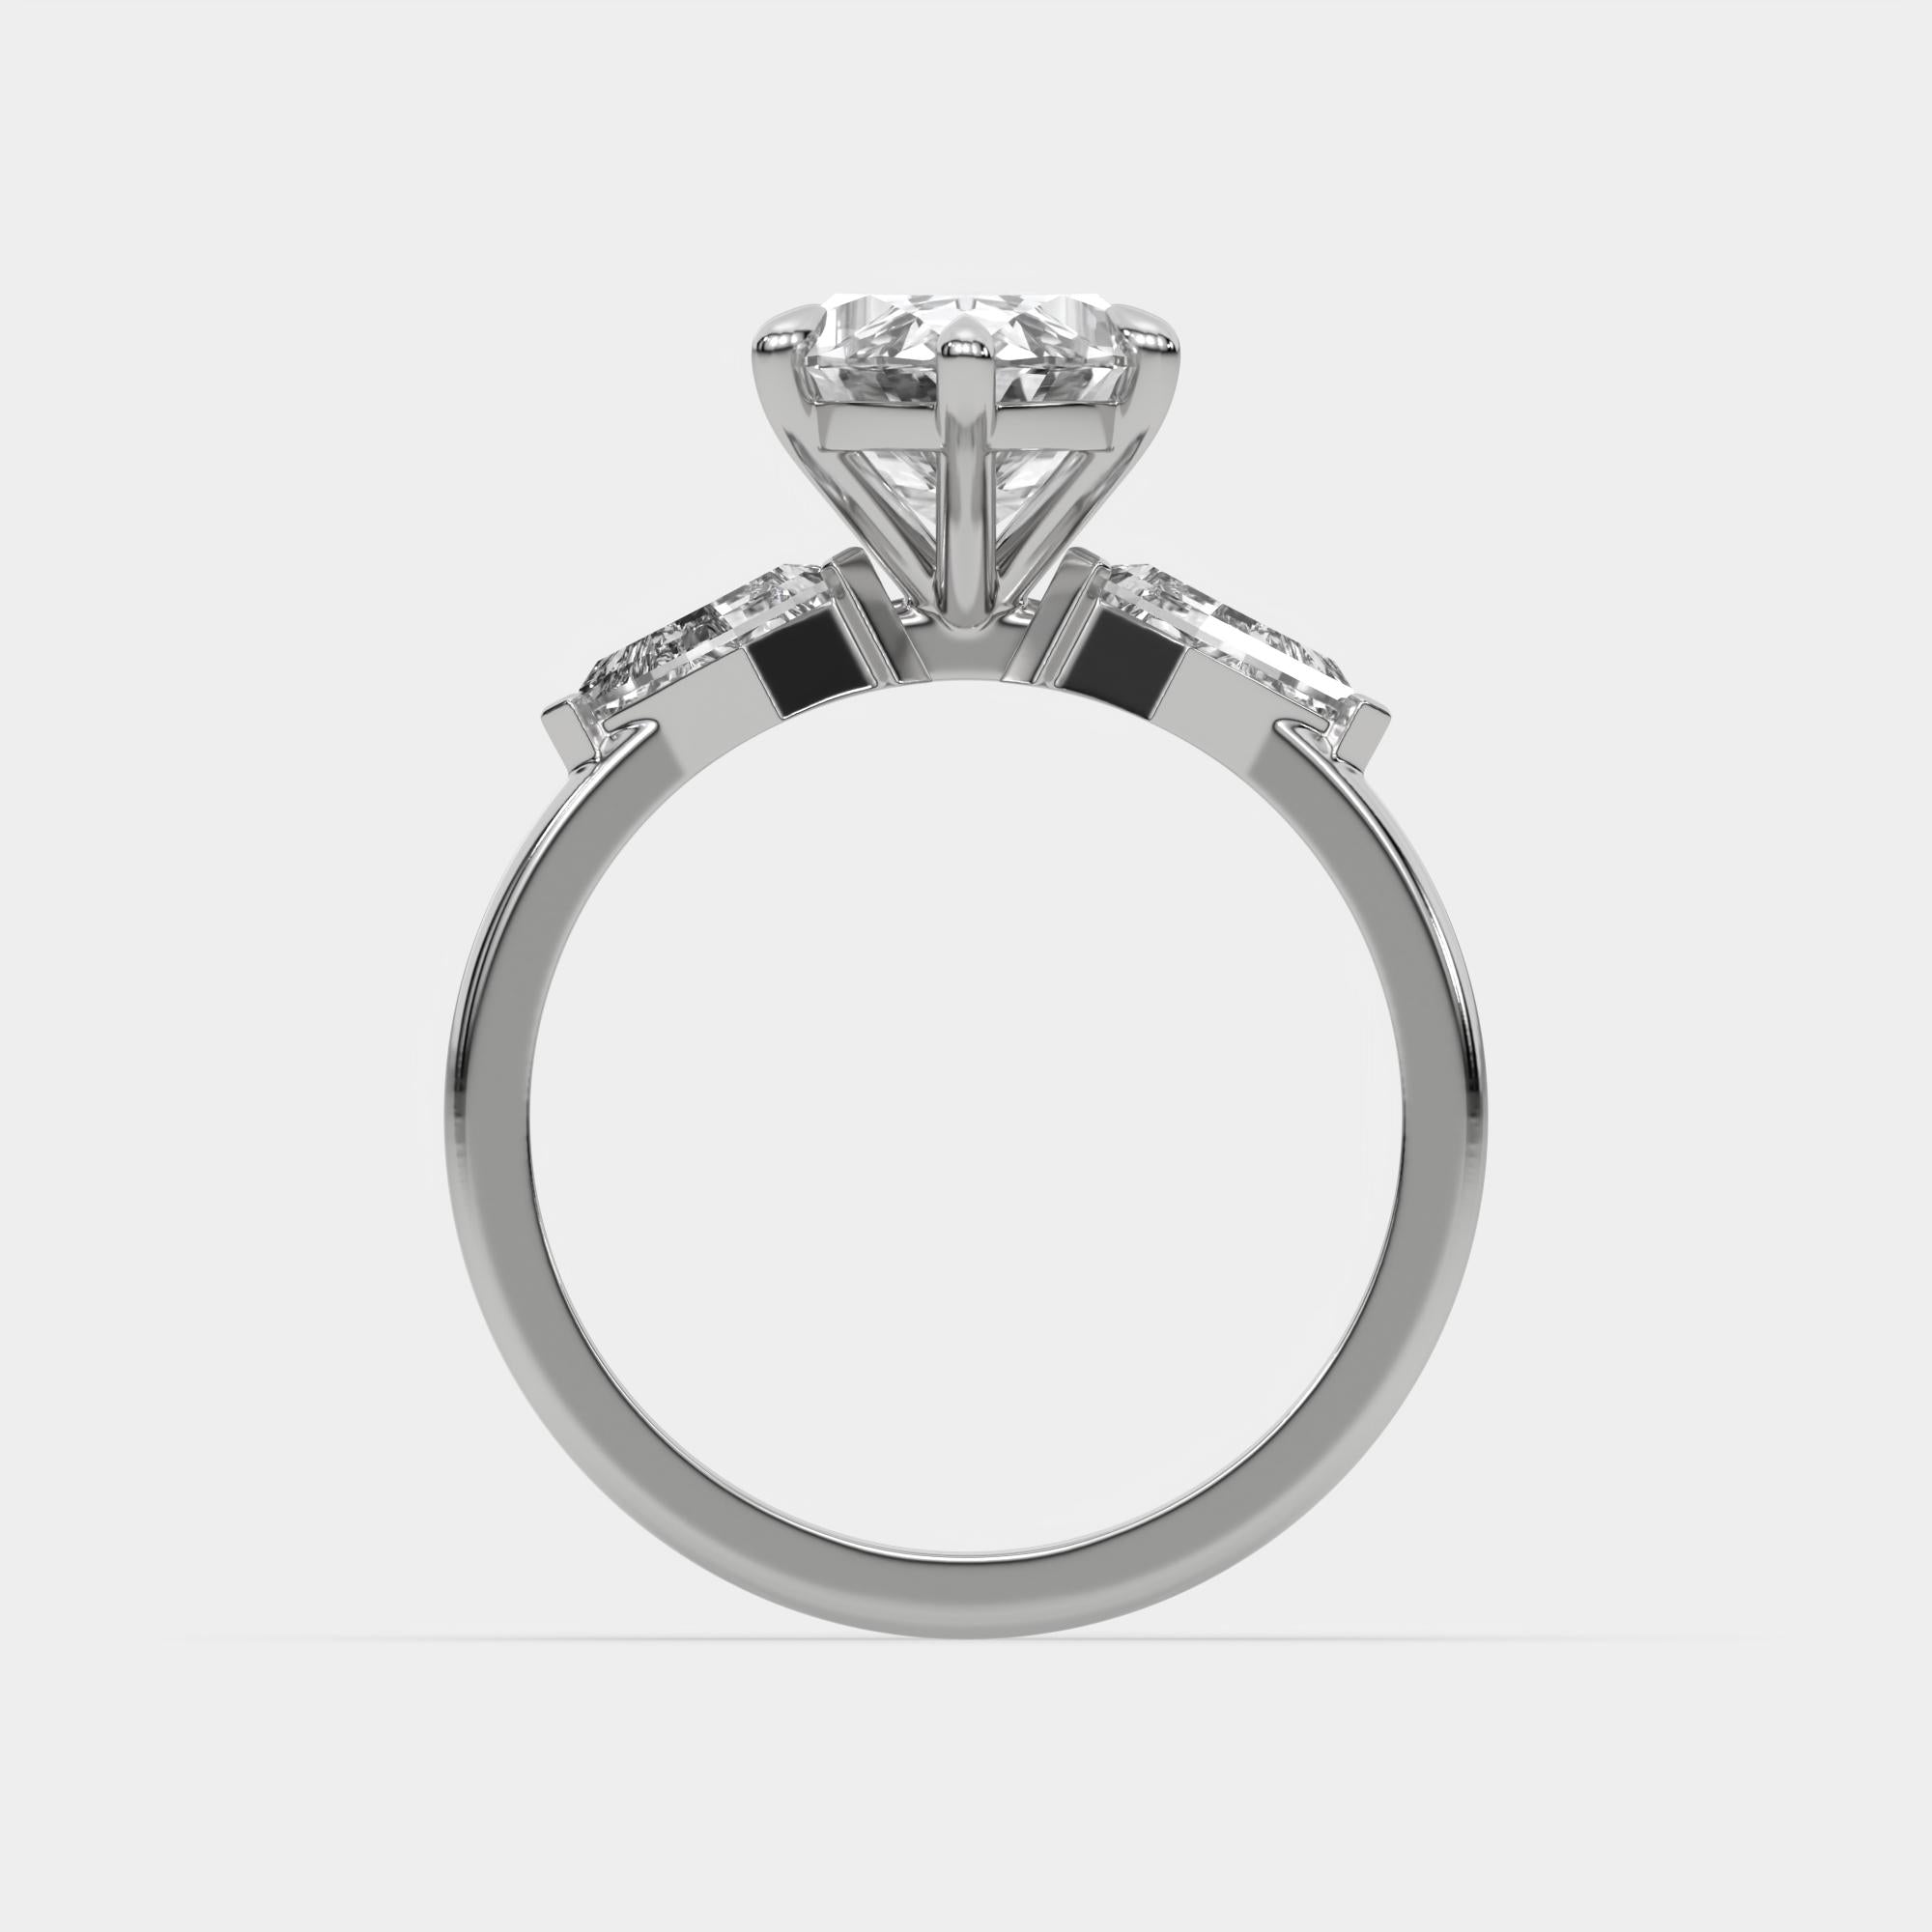 Marquise cut Moissanite engagement ring set